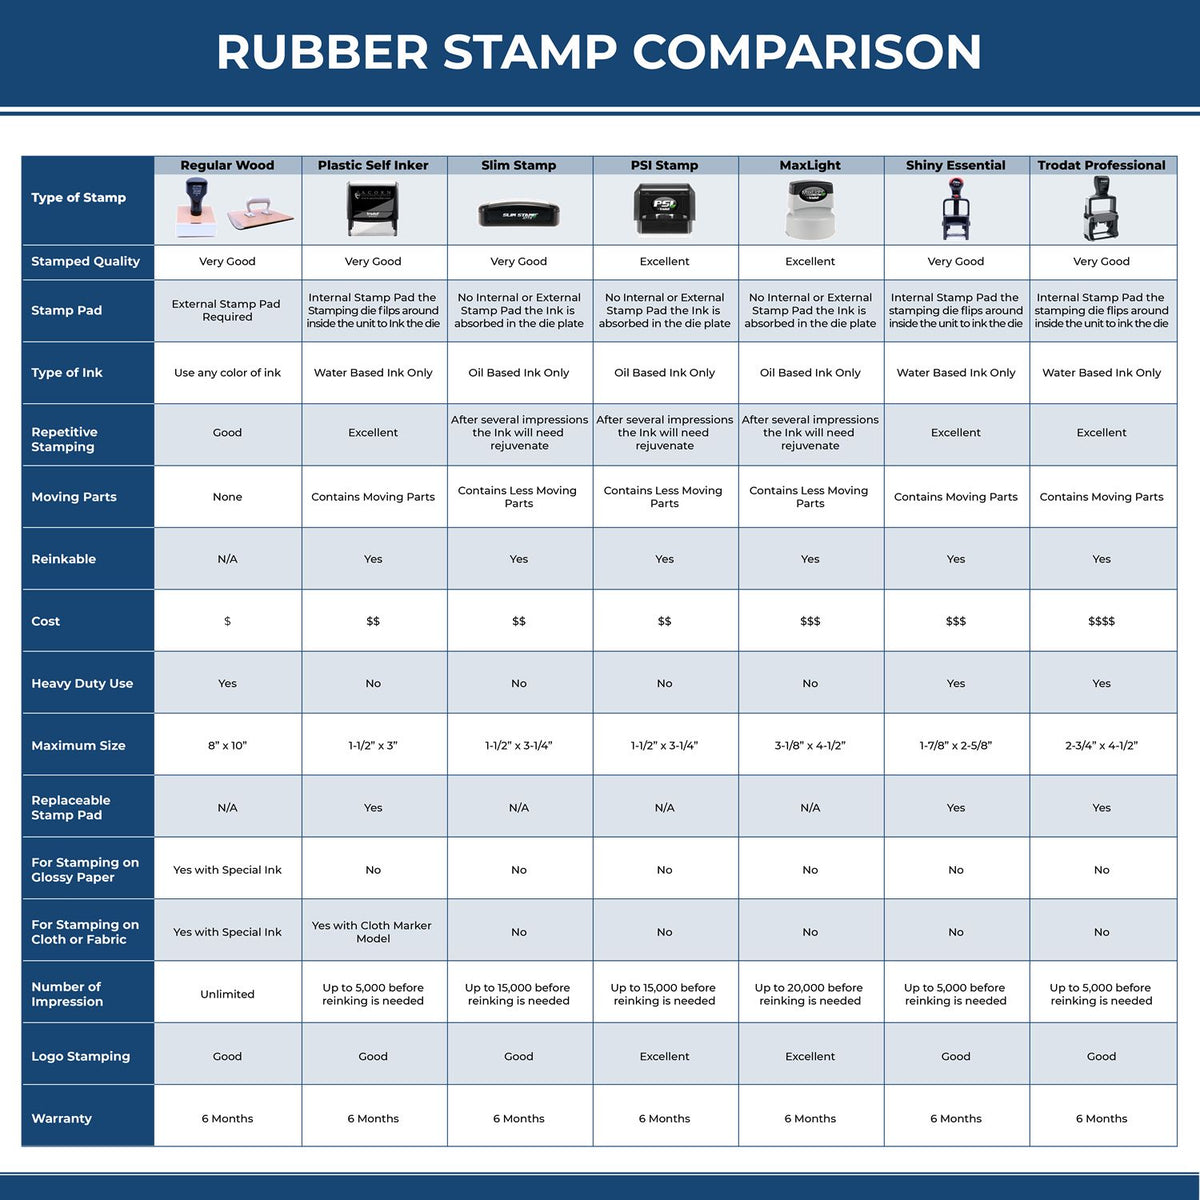 Large Official Transcript Rubber Stamp 4671R Rubber Stamp Comparison